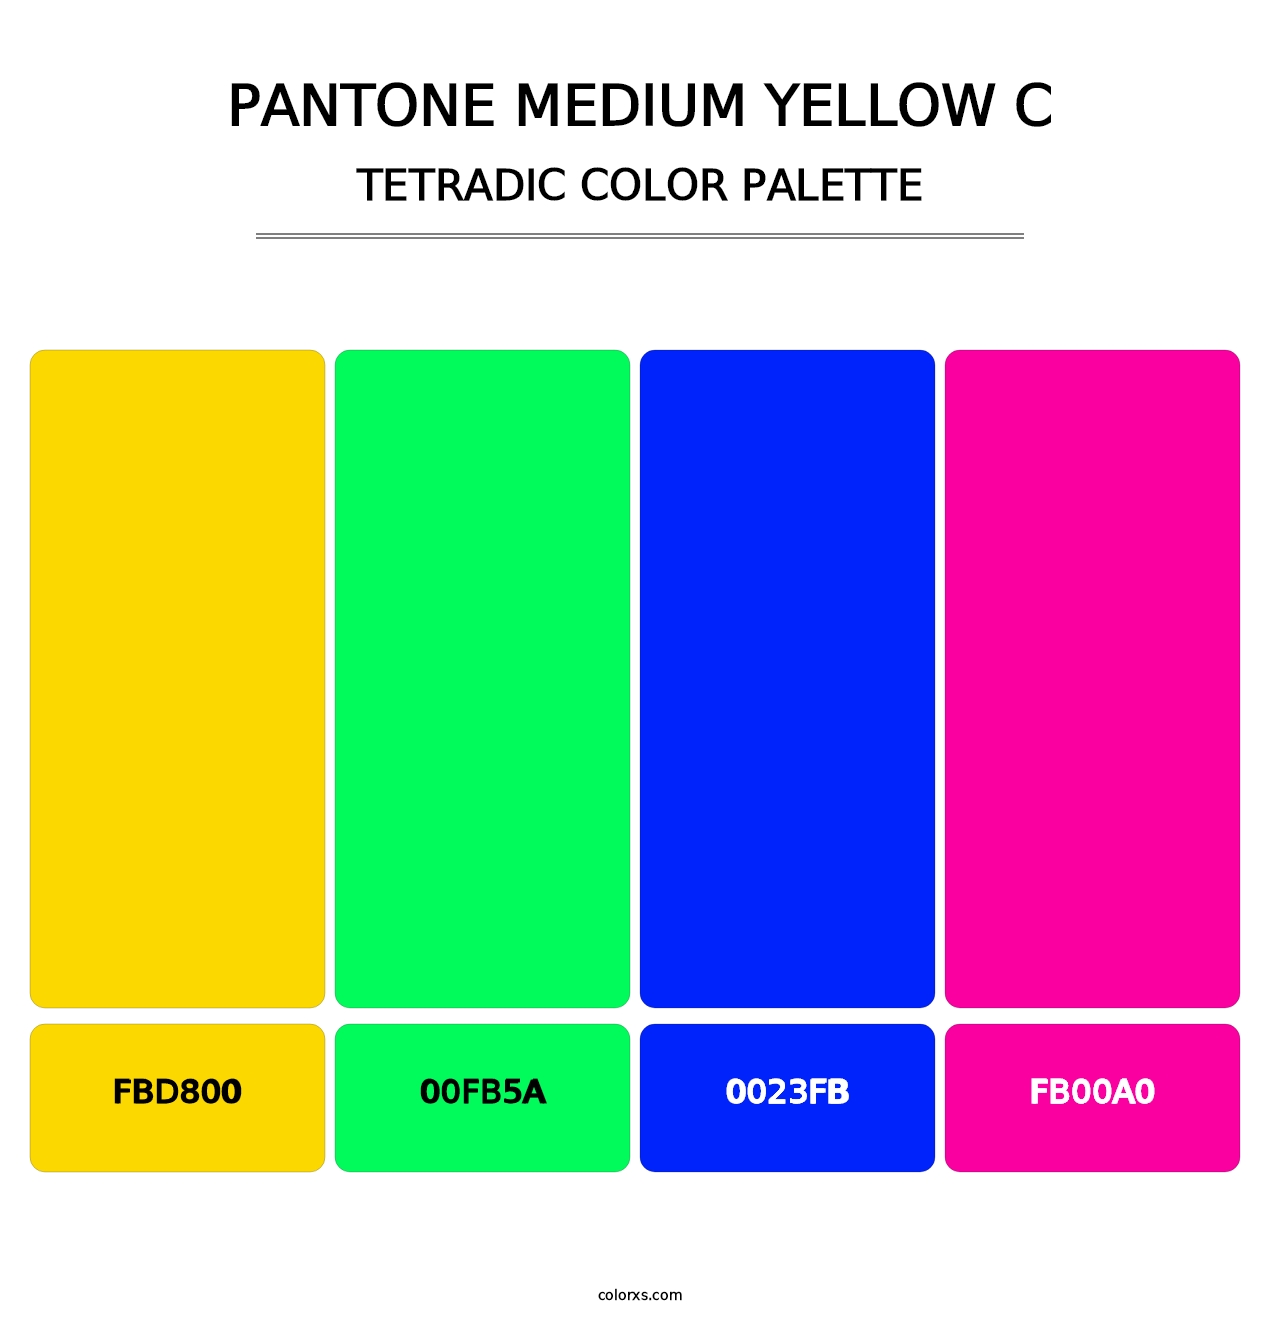 PANTONE Medium Yellow C - Tetradic Color Palette